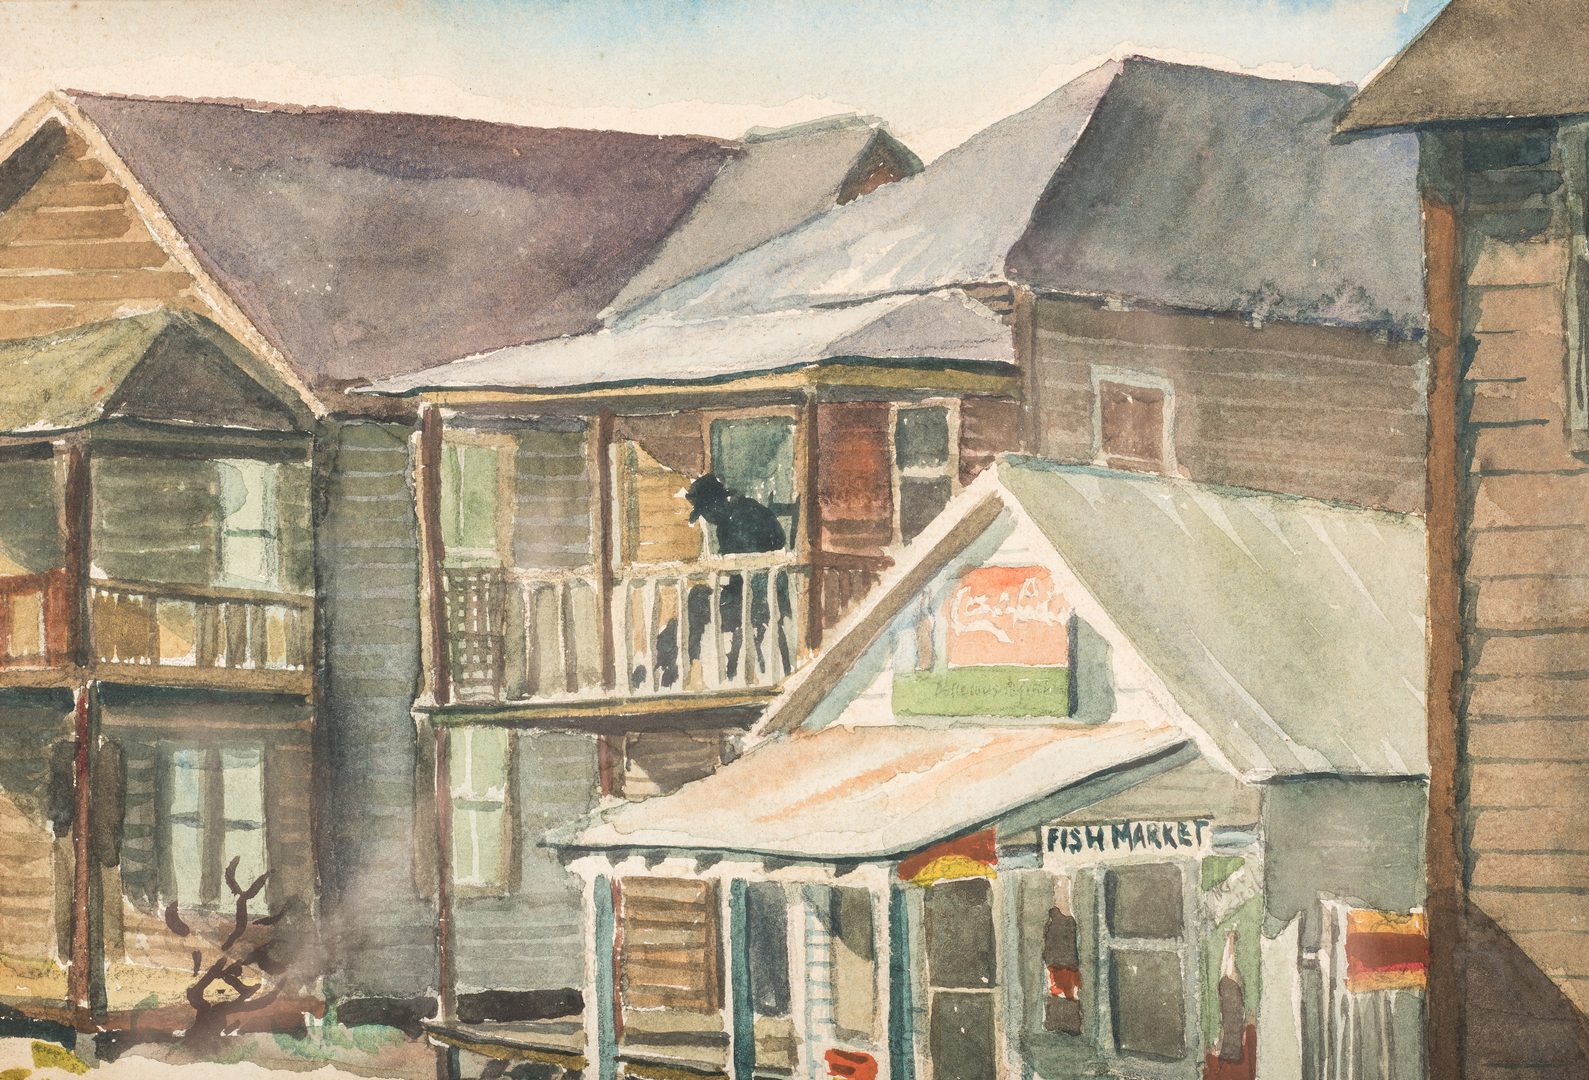 Lot 477: 2 Harry Shaw Watercolor Street Scenes, incl. Fish Market